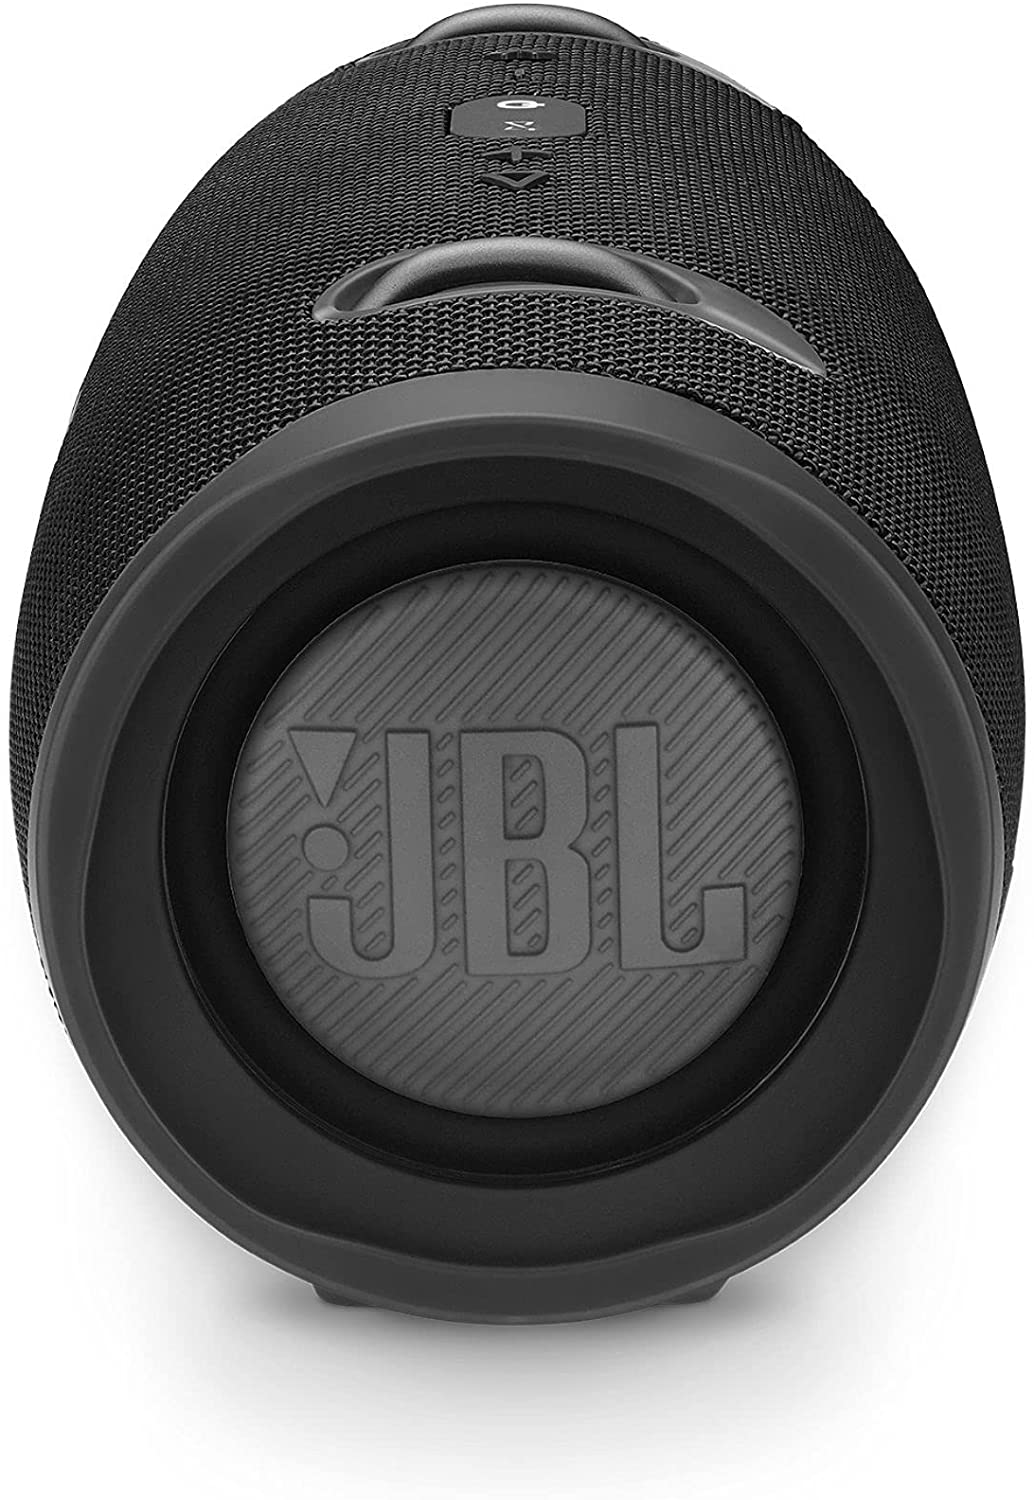 JBL Xtreme Portable Wireless Speaker (Black) - image 3 of 8